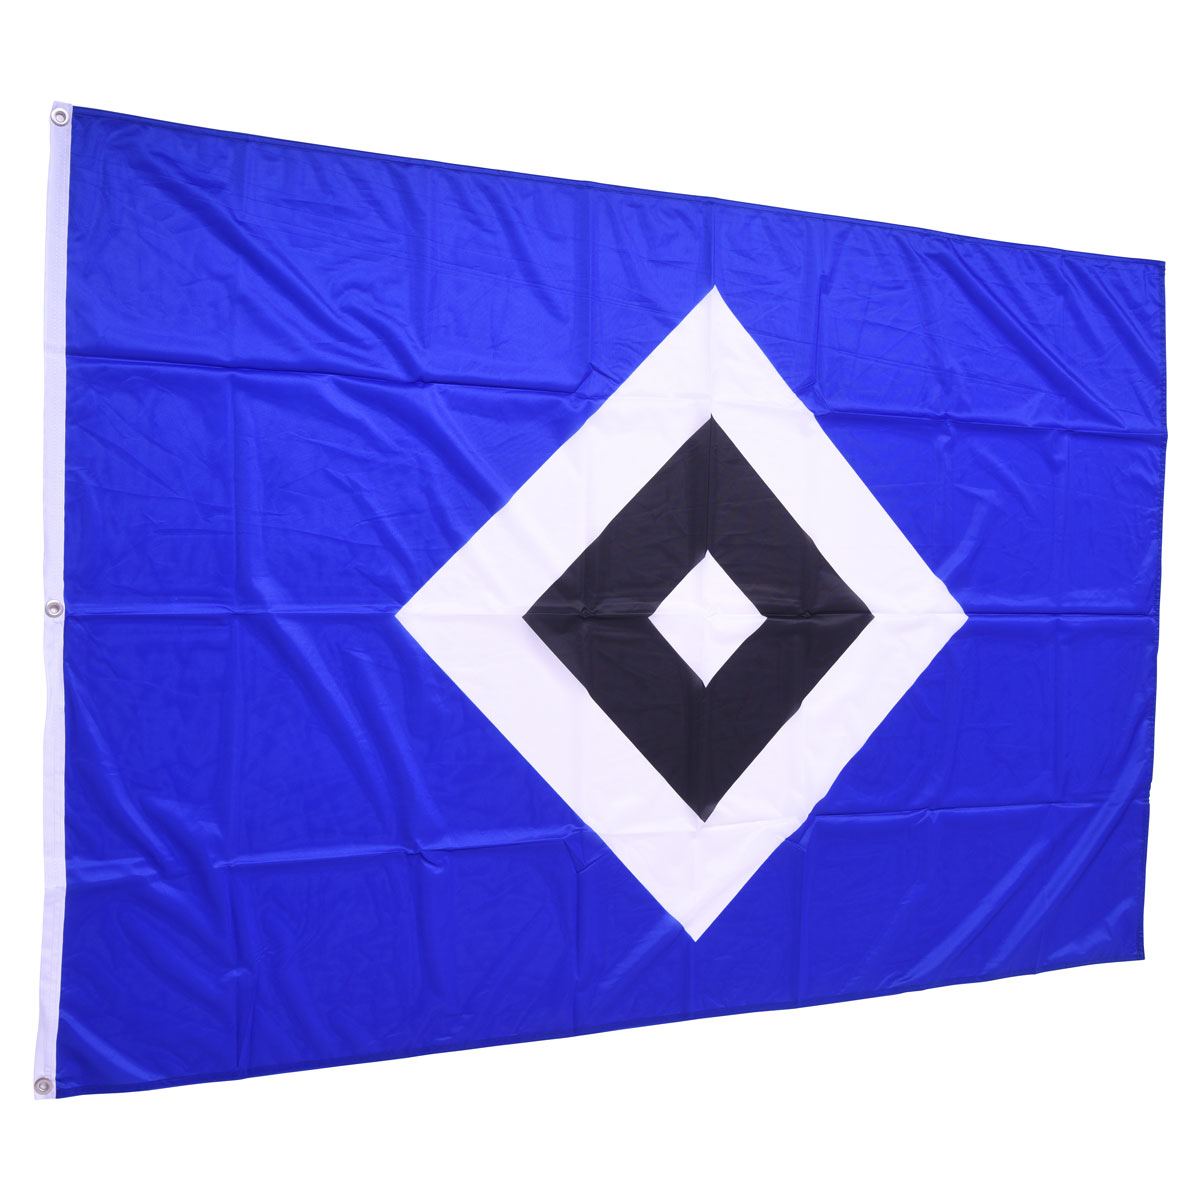 Hamburger SV hoisting flag "Allotment" - blue